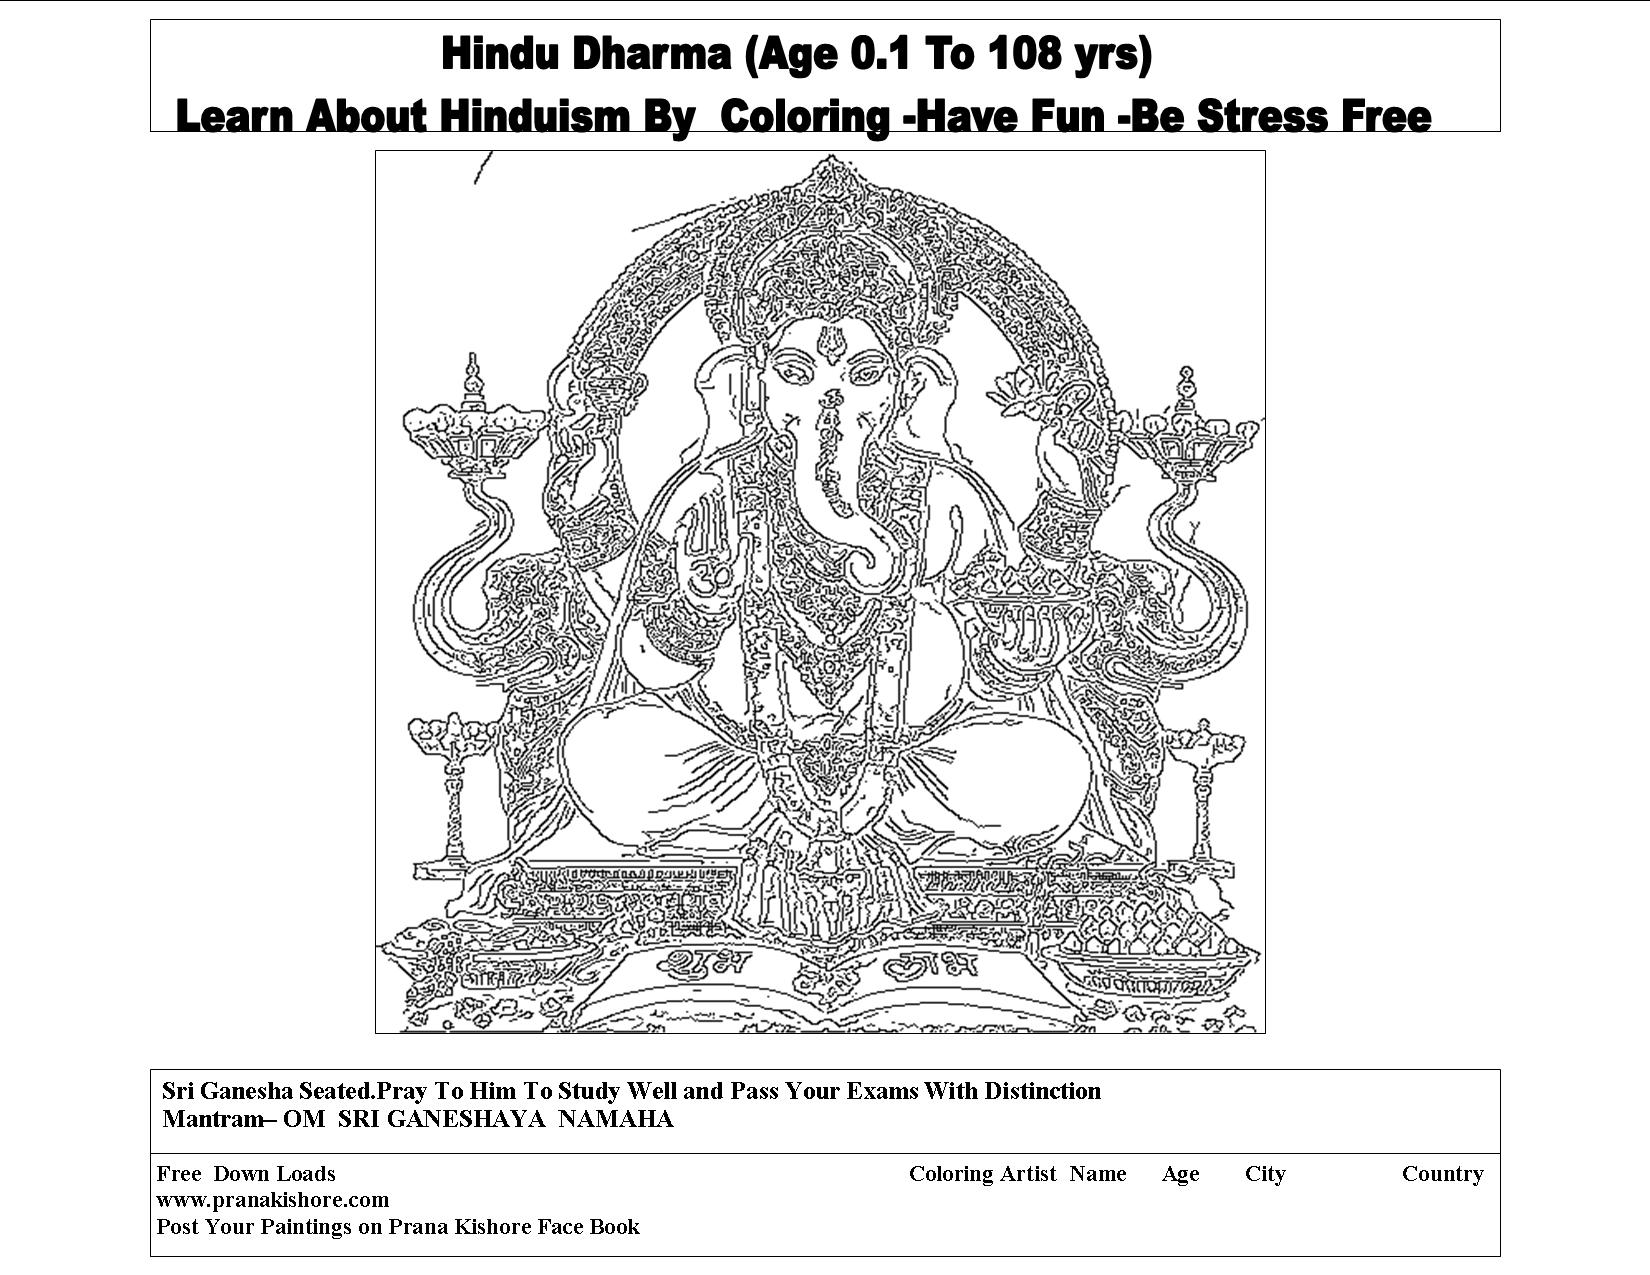 Hindu Dharma Coloring-Sri Ganesha Seated Pray to him